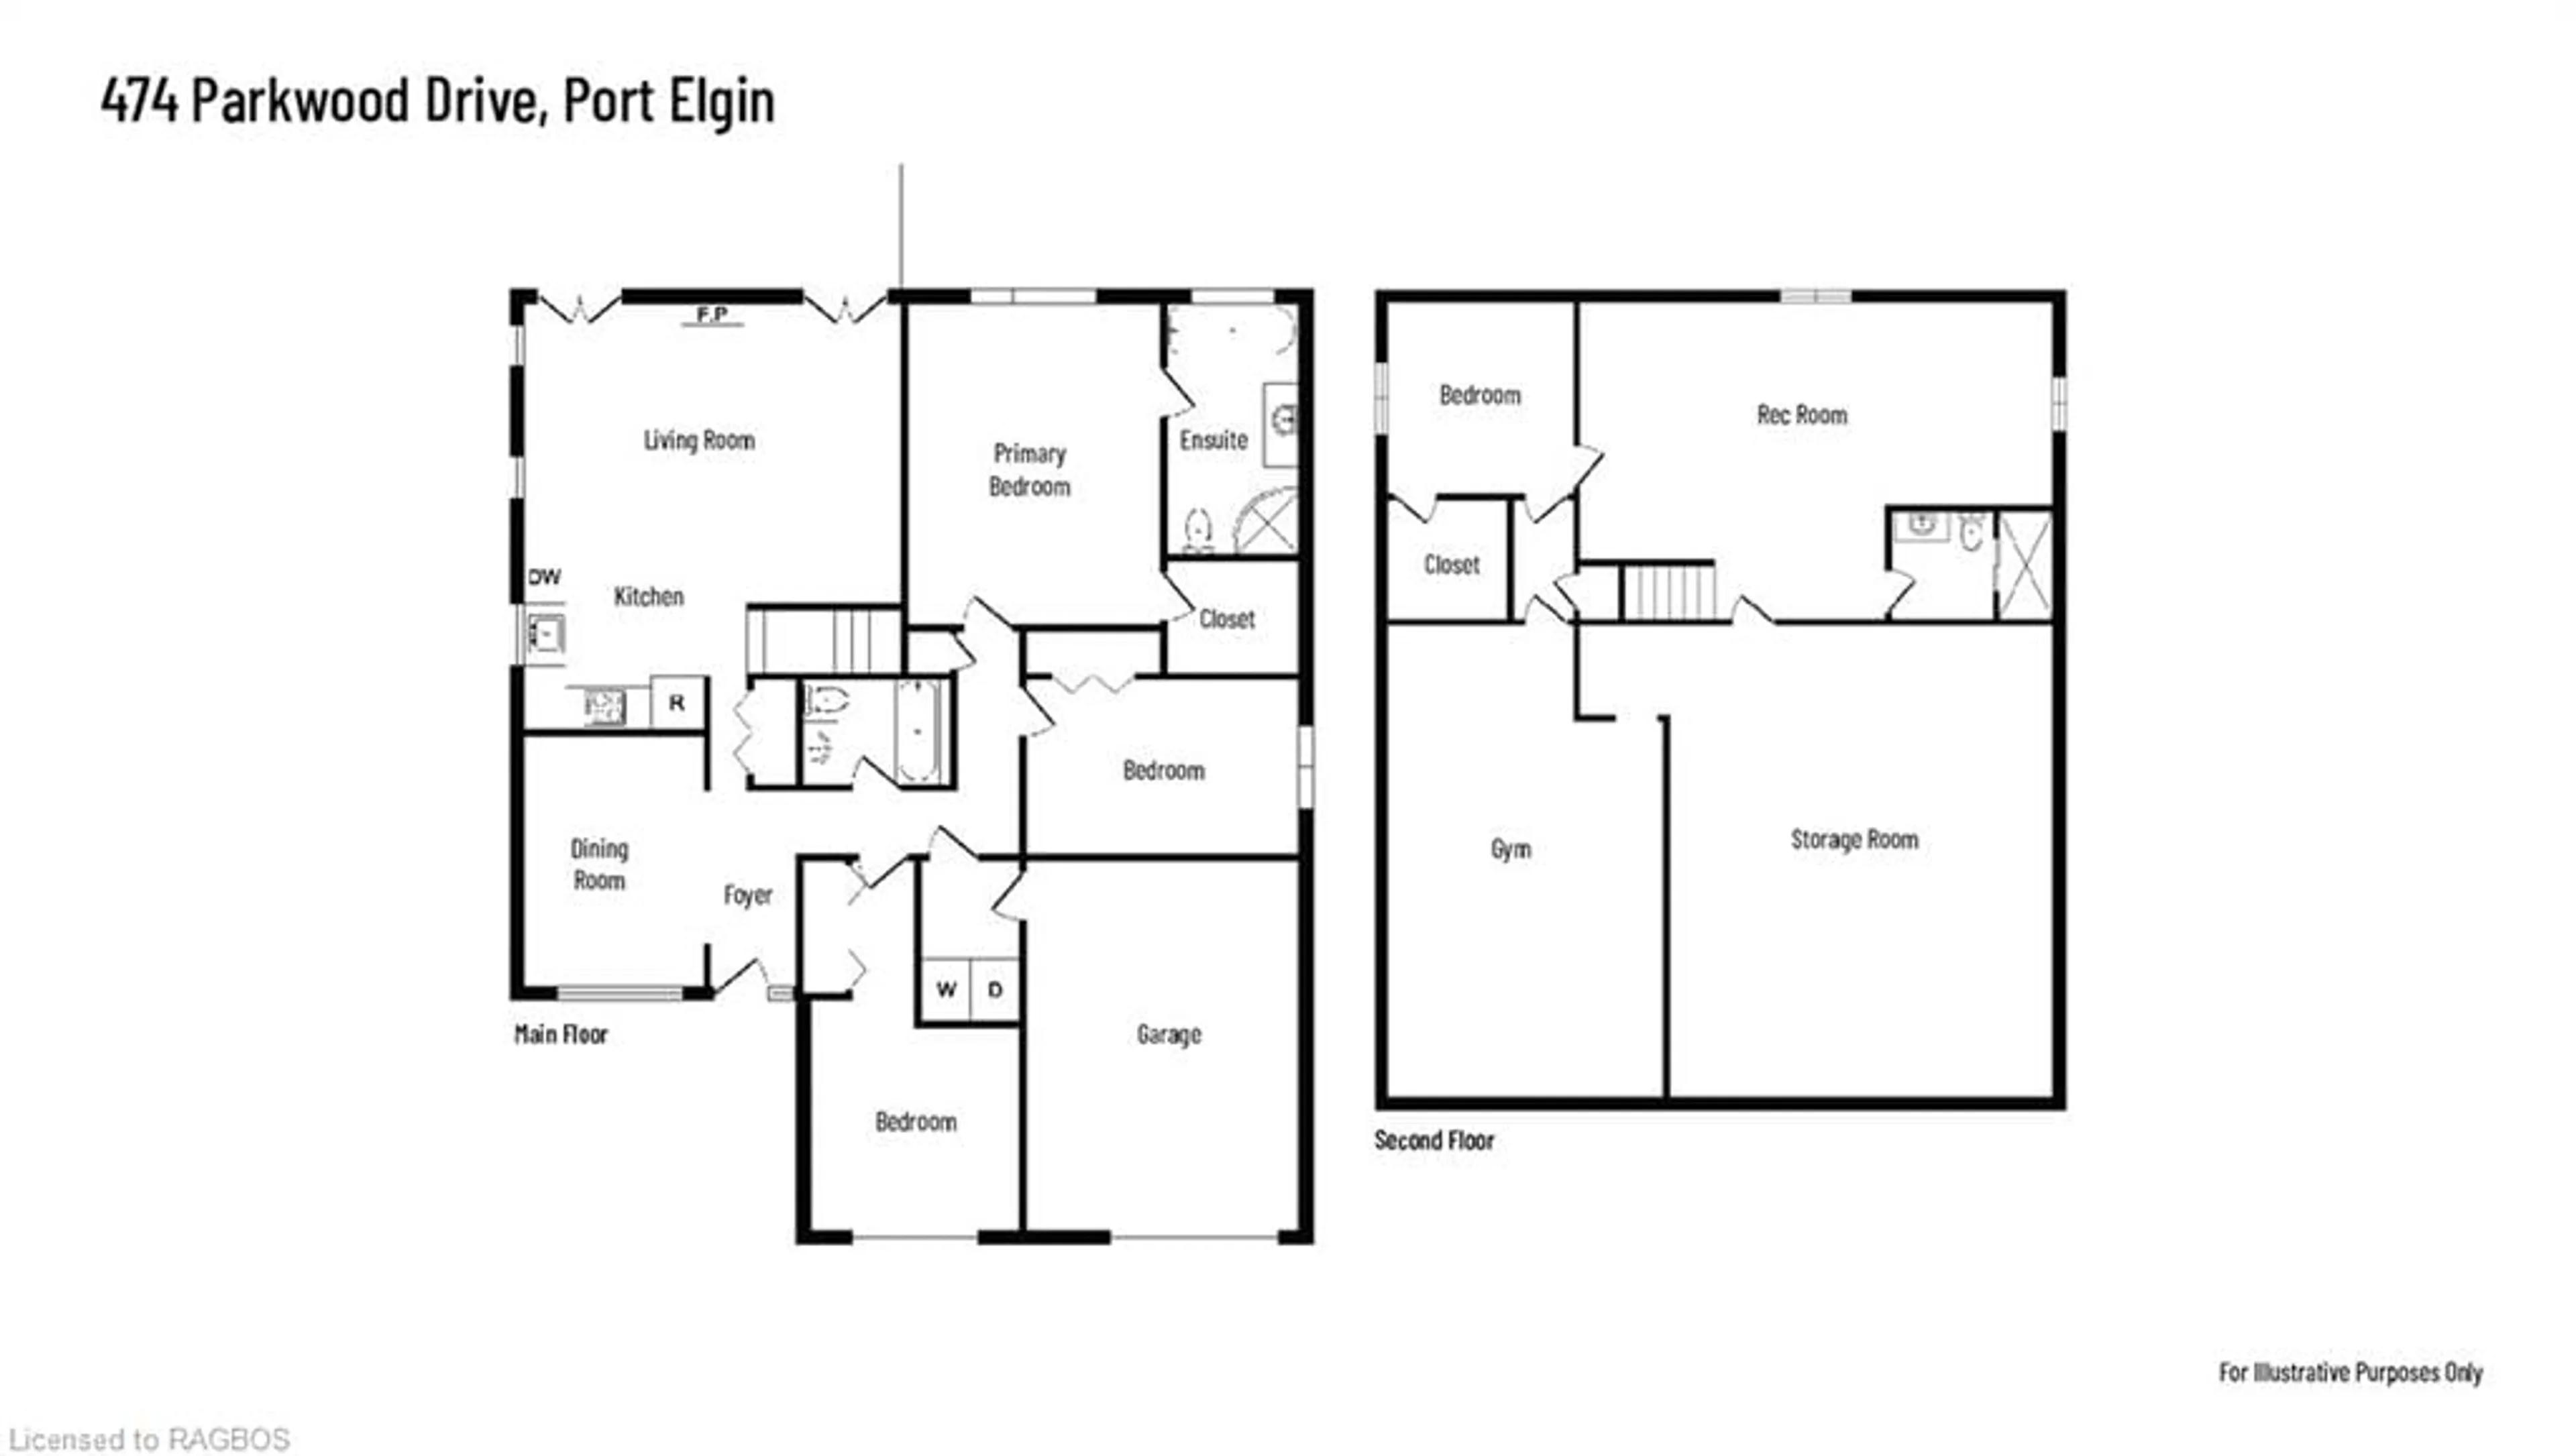 Floor plan for 474 Parkwood Dr, Port Elgin Ontario N0H 2C2